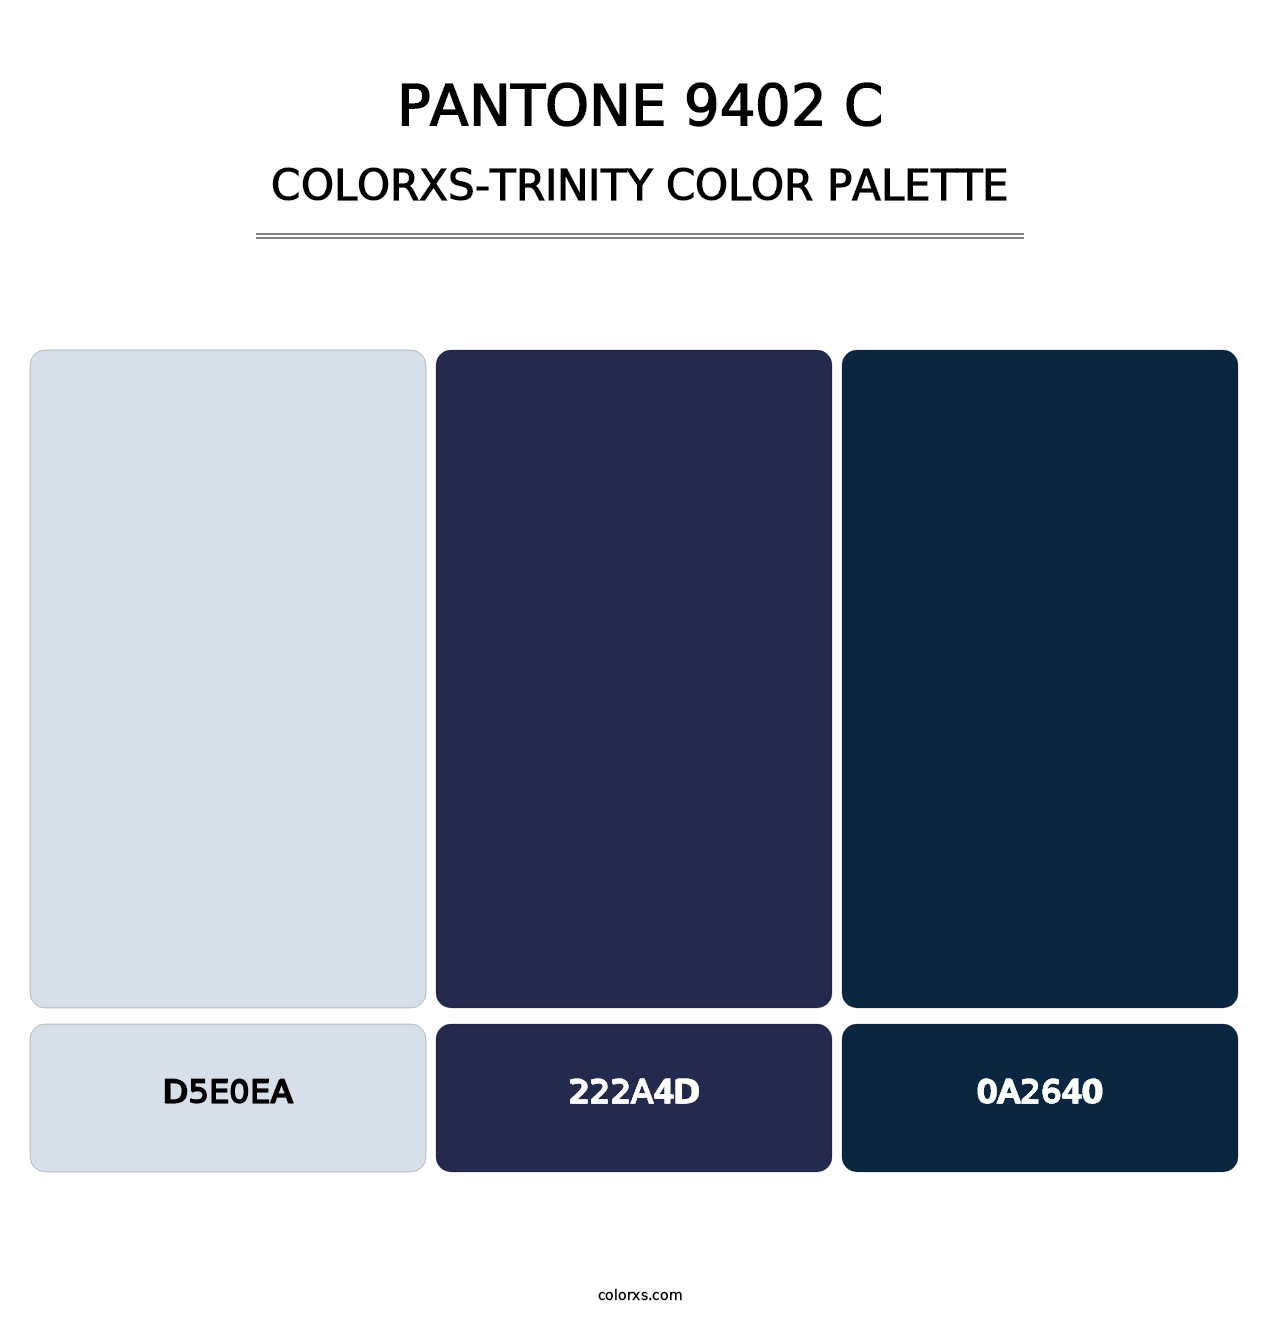 PANTONE 9402 C - Colorxs Trinity Palette